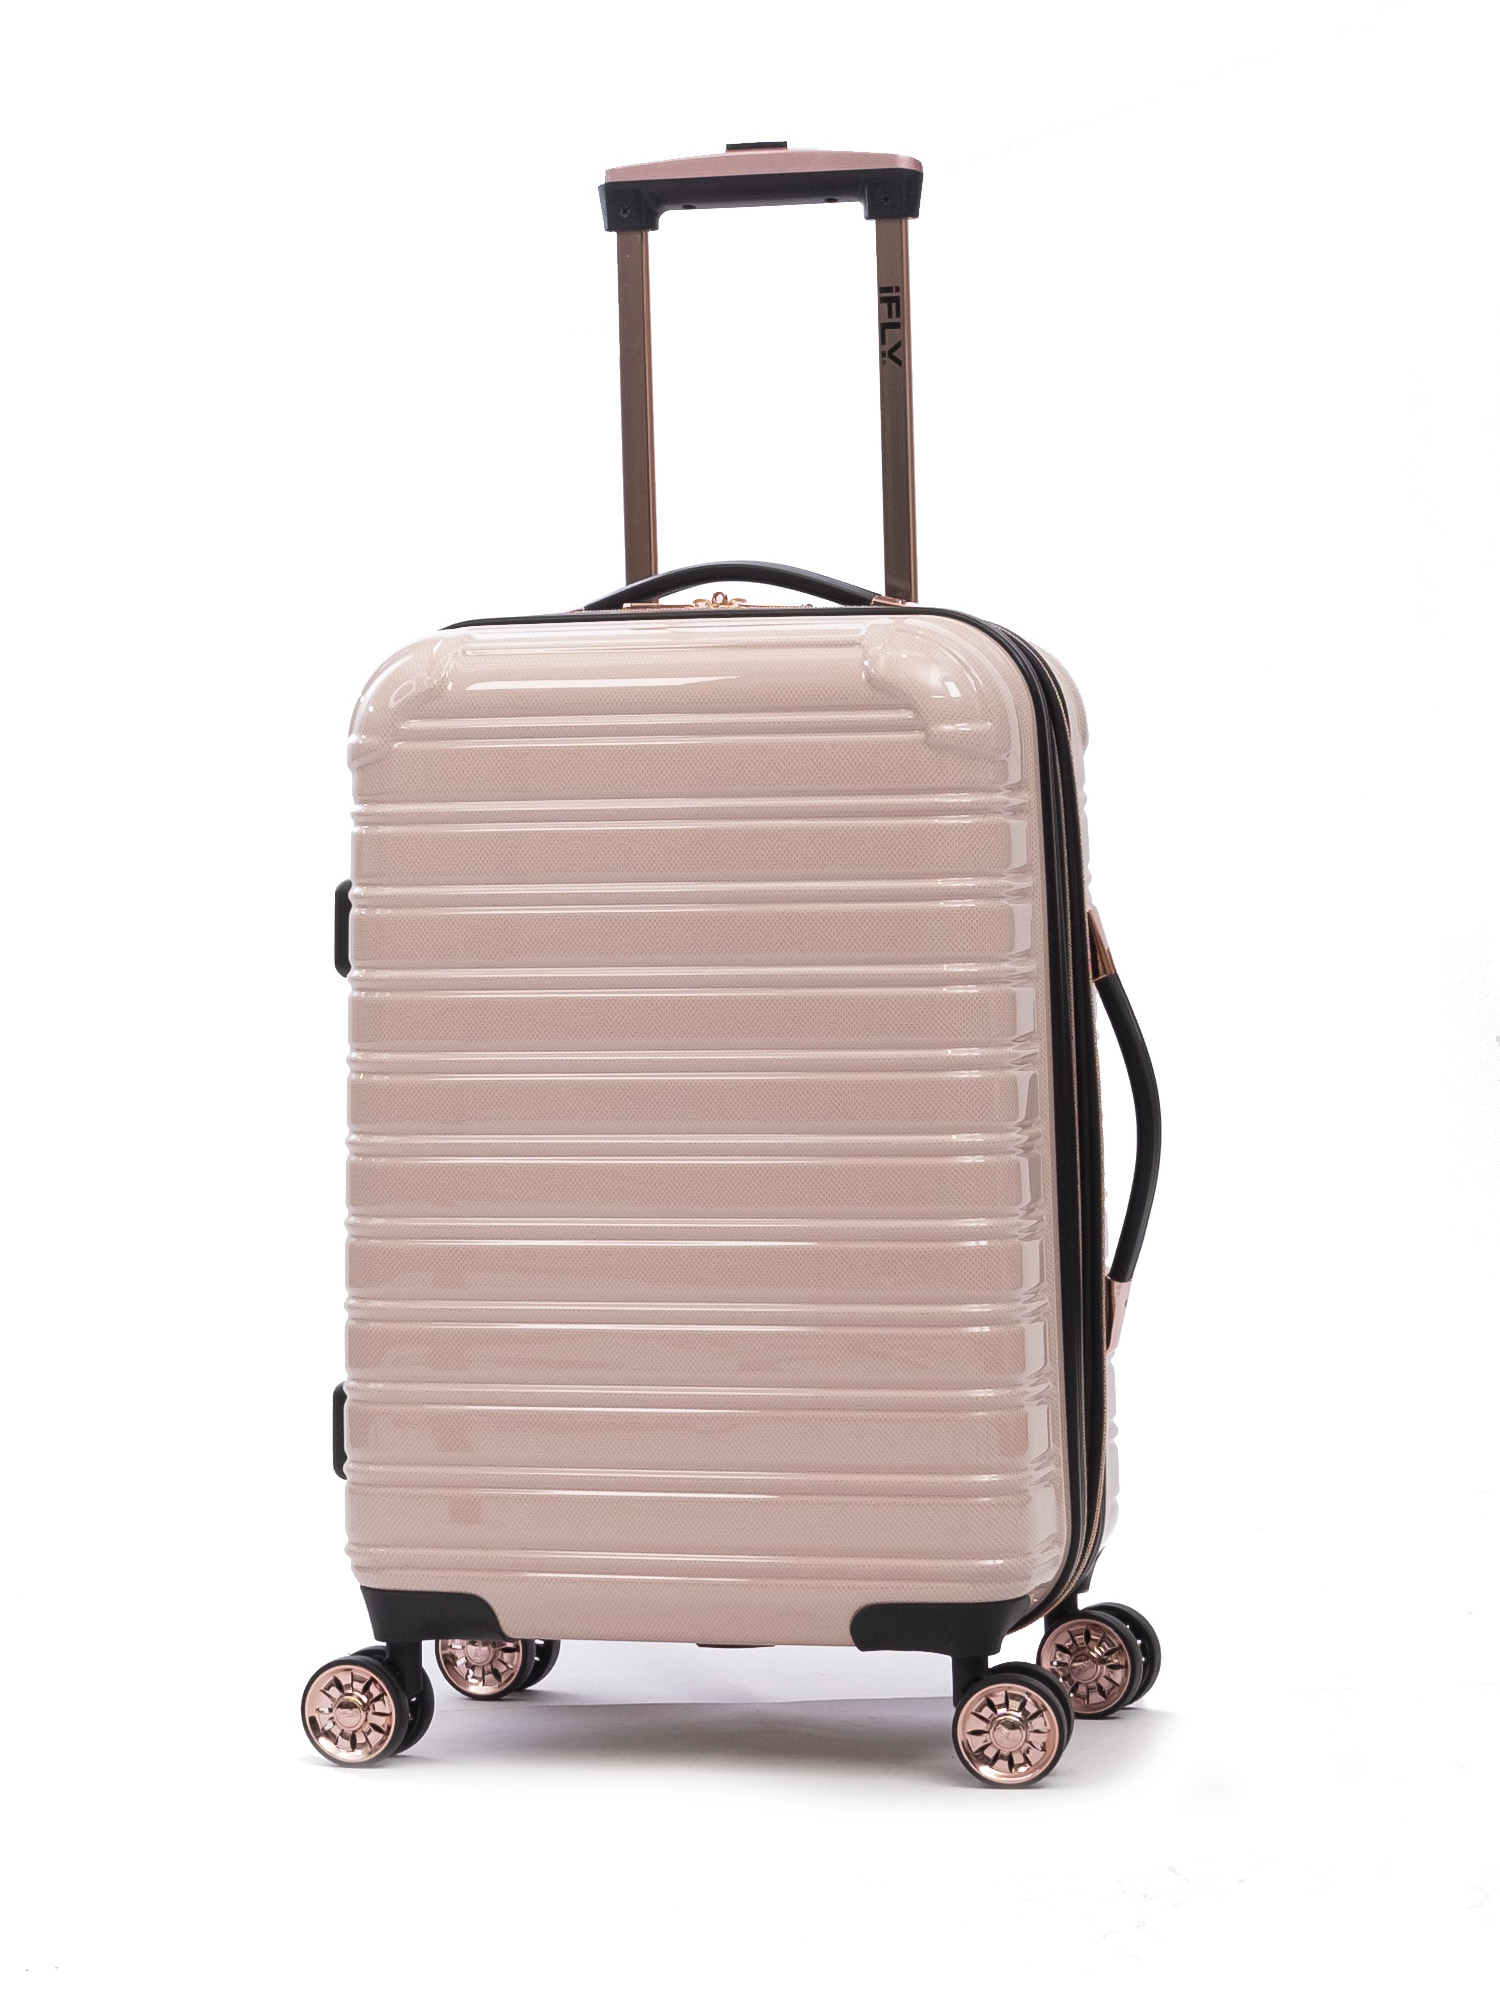 iFLY Hardside Luggage Fibertech 20 Inch Carry-on, Blush/Rose Gold - image 1 of 8